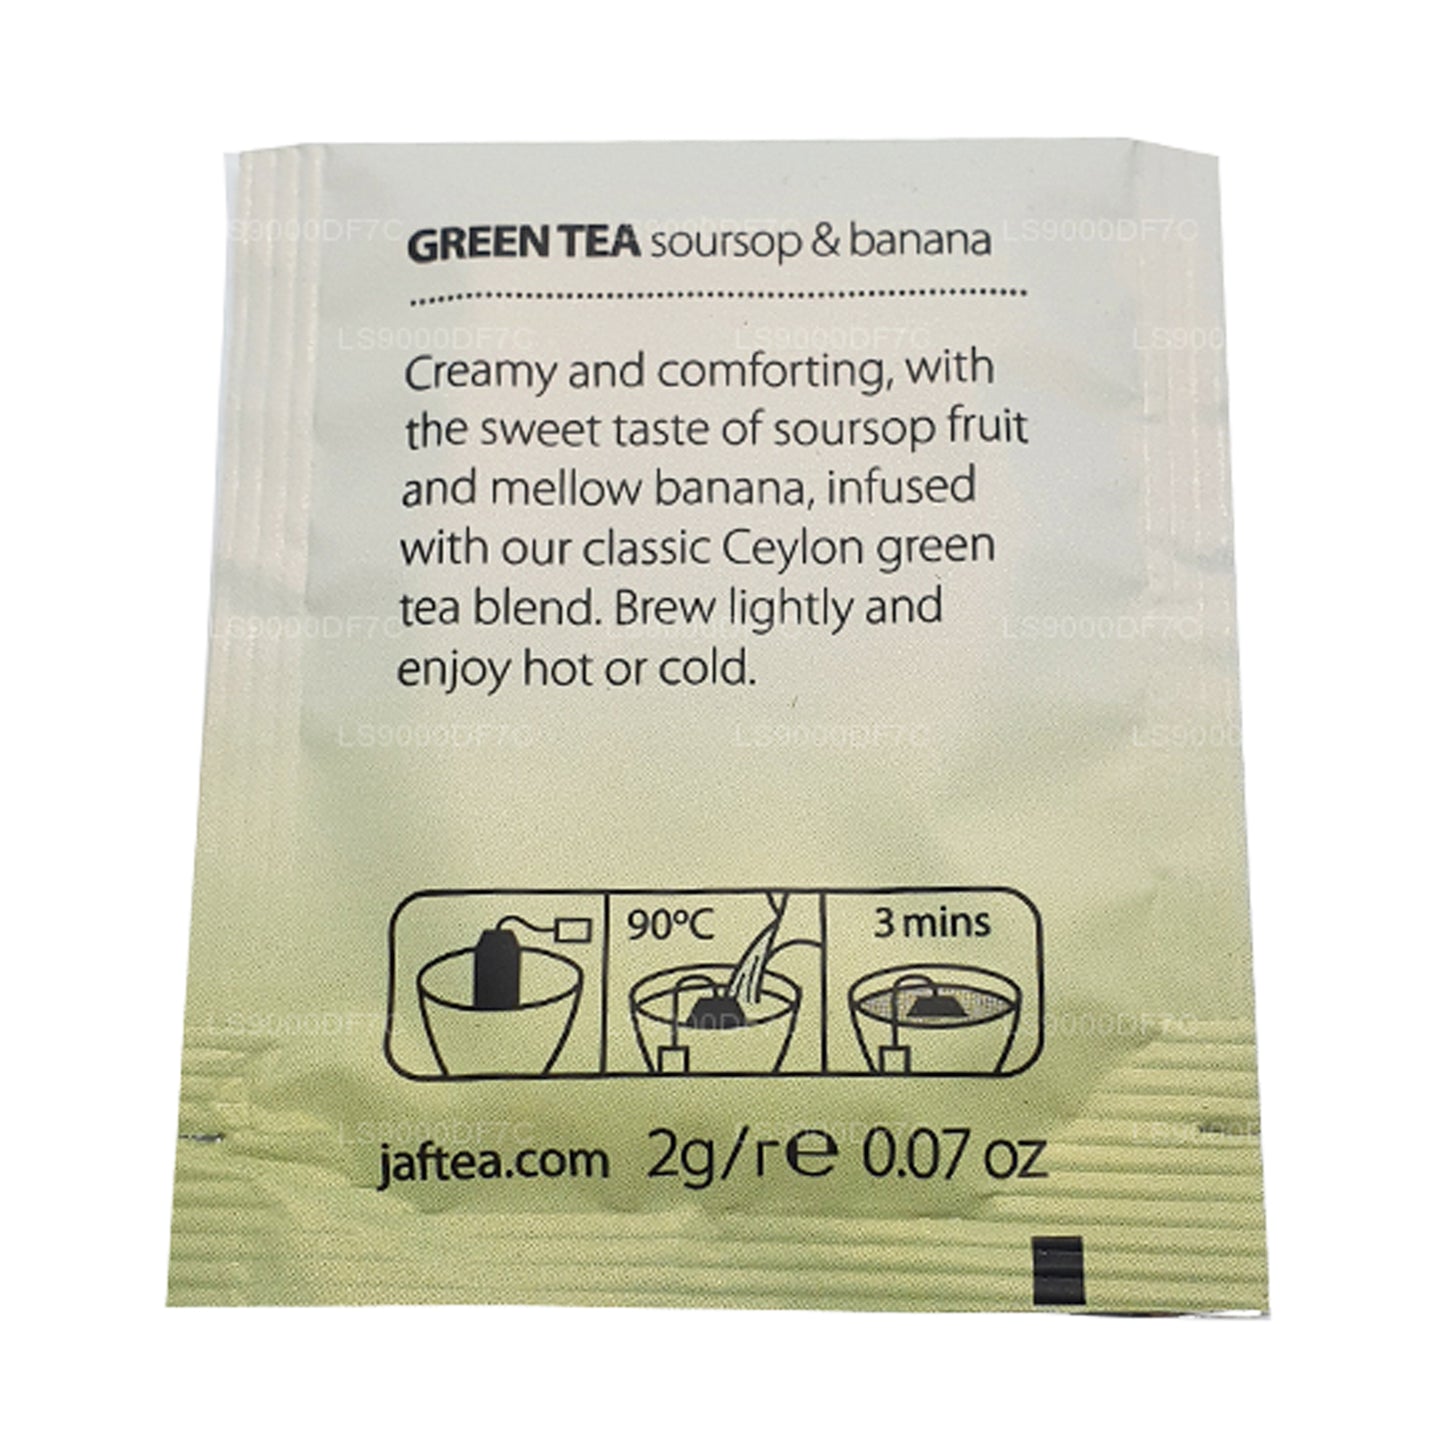 Jaf Tea Pure Teas and Infusions Foil Envelop Tea Bags (145g)